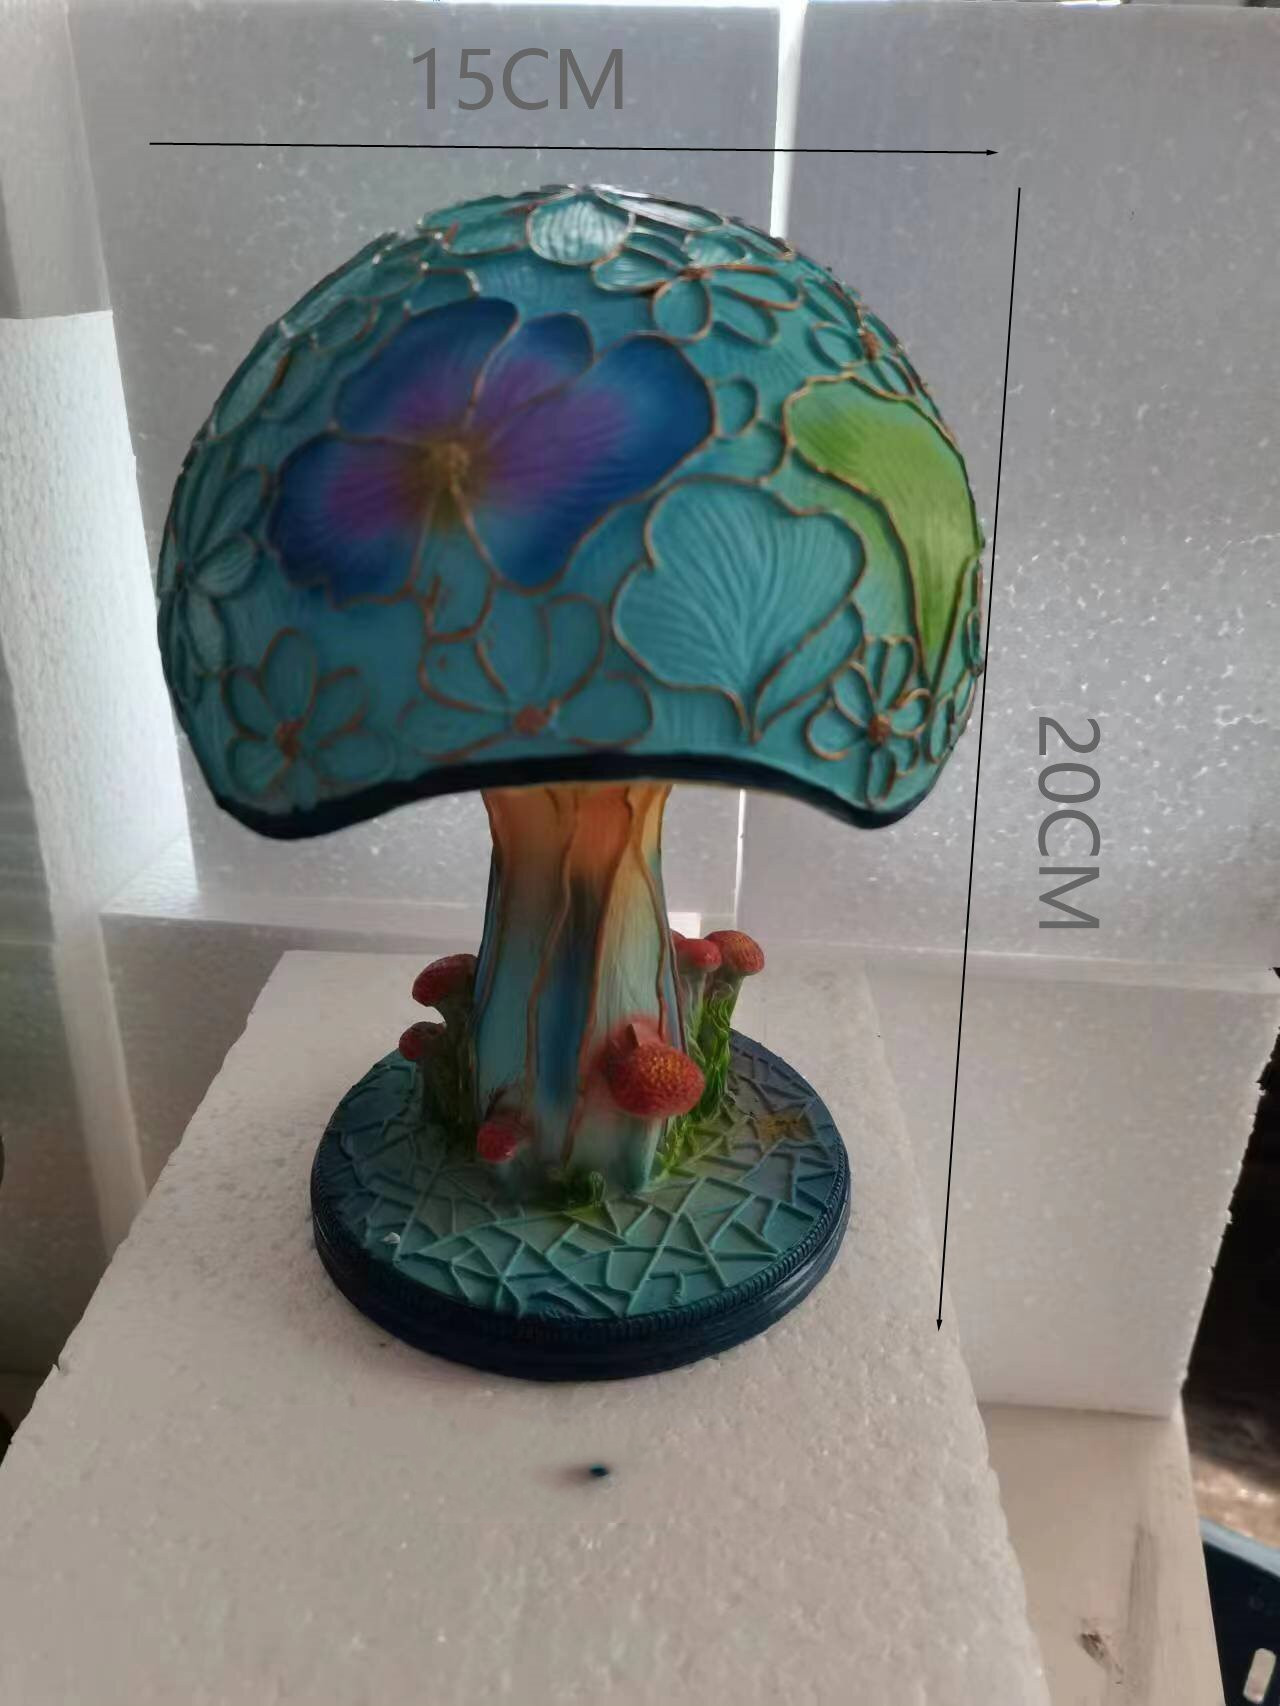 Colored Glass Plant Series Desk Lamp